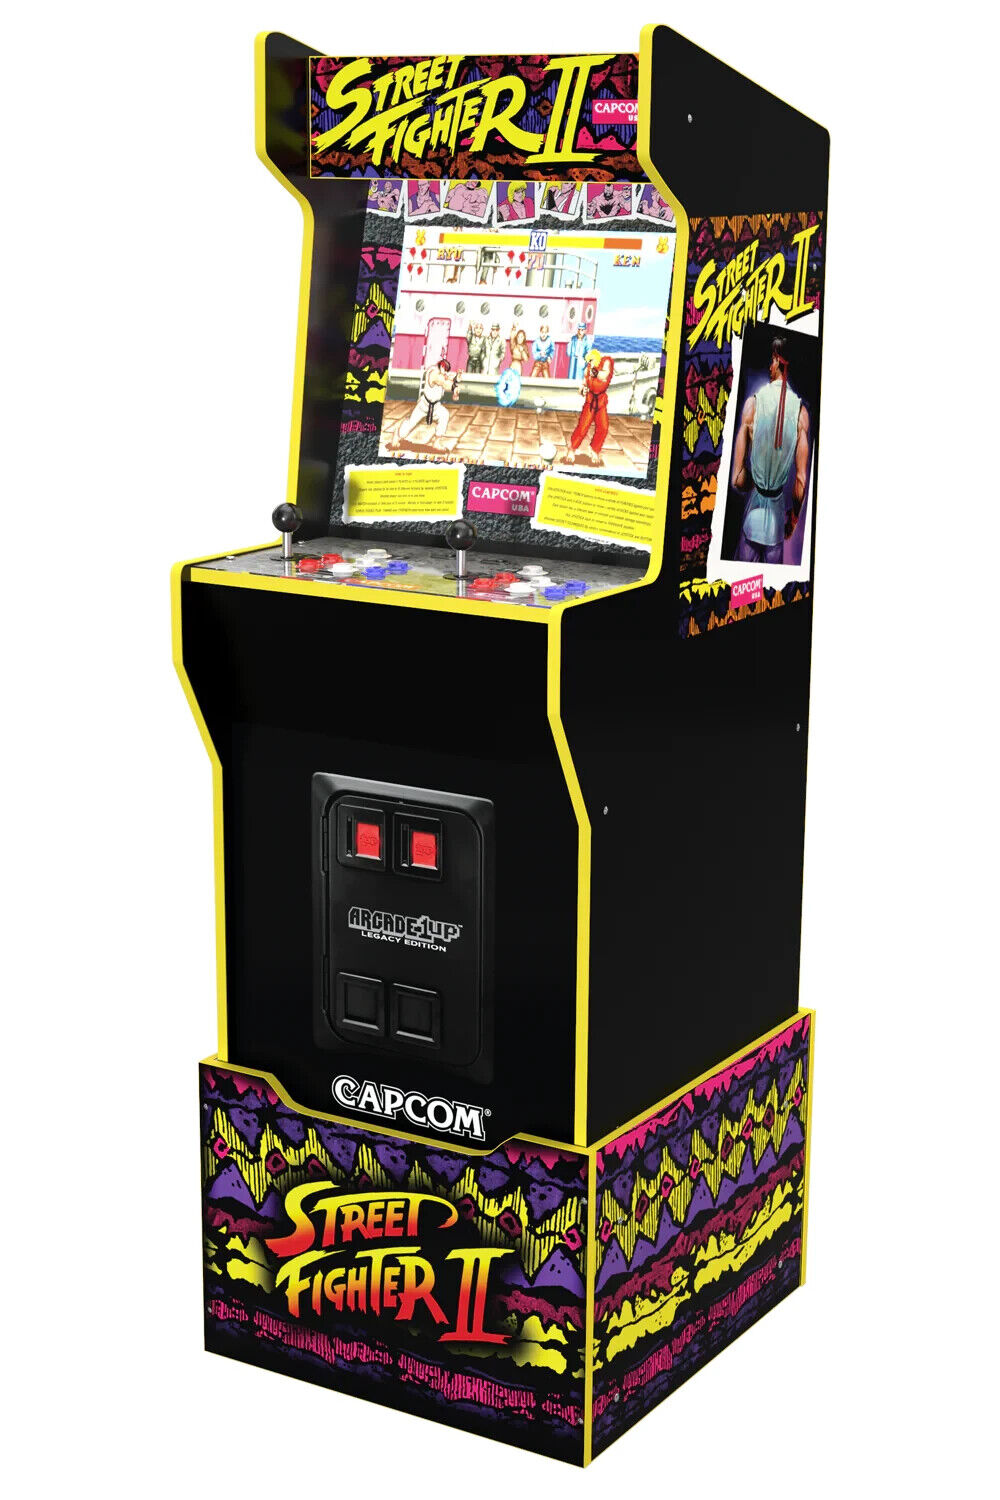 (New) Arcade1Up Street Fighter II Capcom Legacy Edition Arcade Machine w/Riser